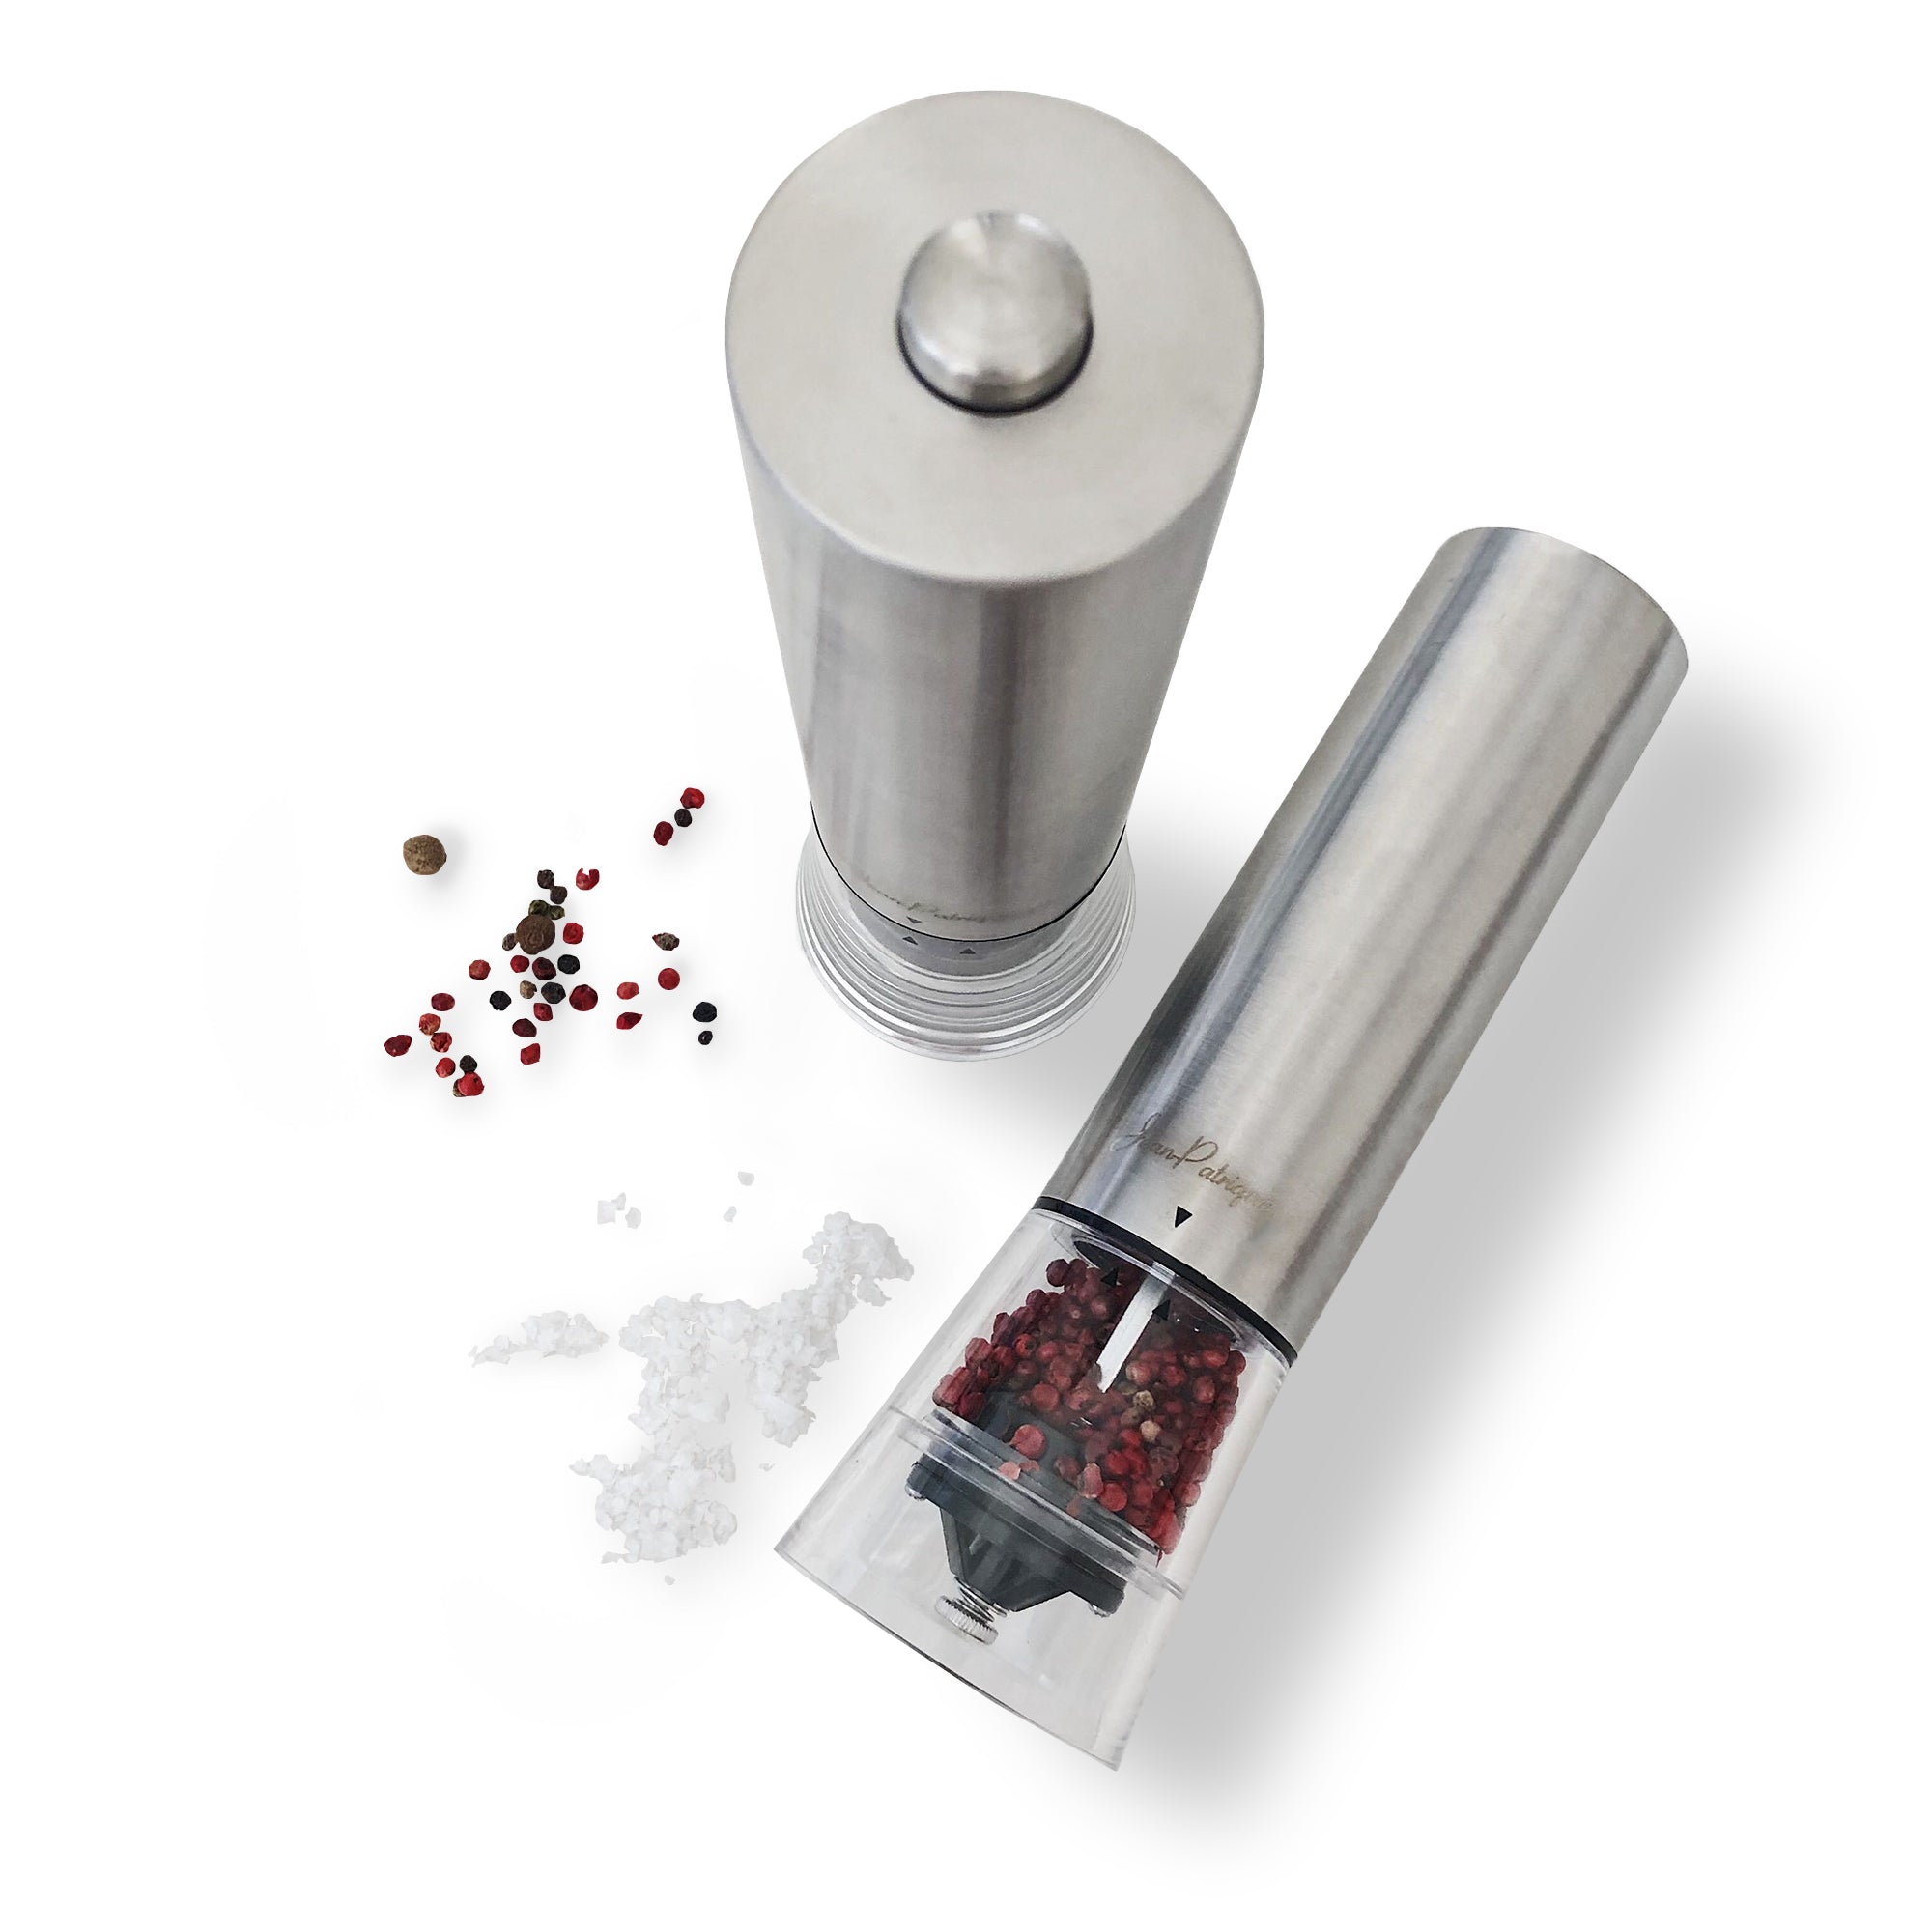 Aptoco Flathead Electric Salt and Pepper Grinder, Salt & Pepper